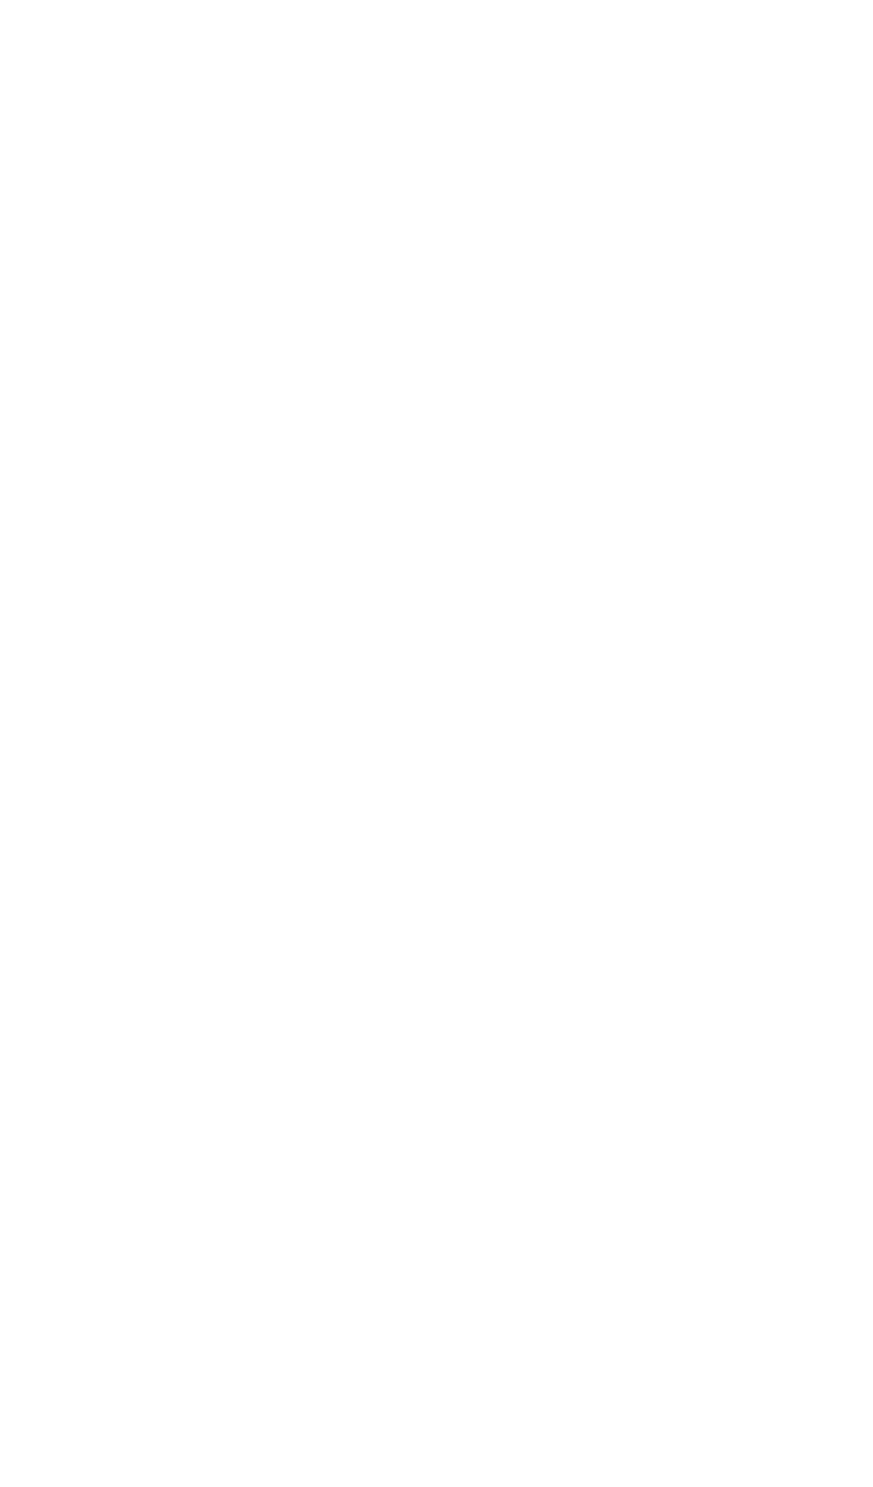 United Bankshares logo pour fonds sombres (PNG transparent)